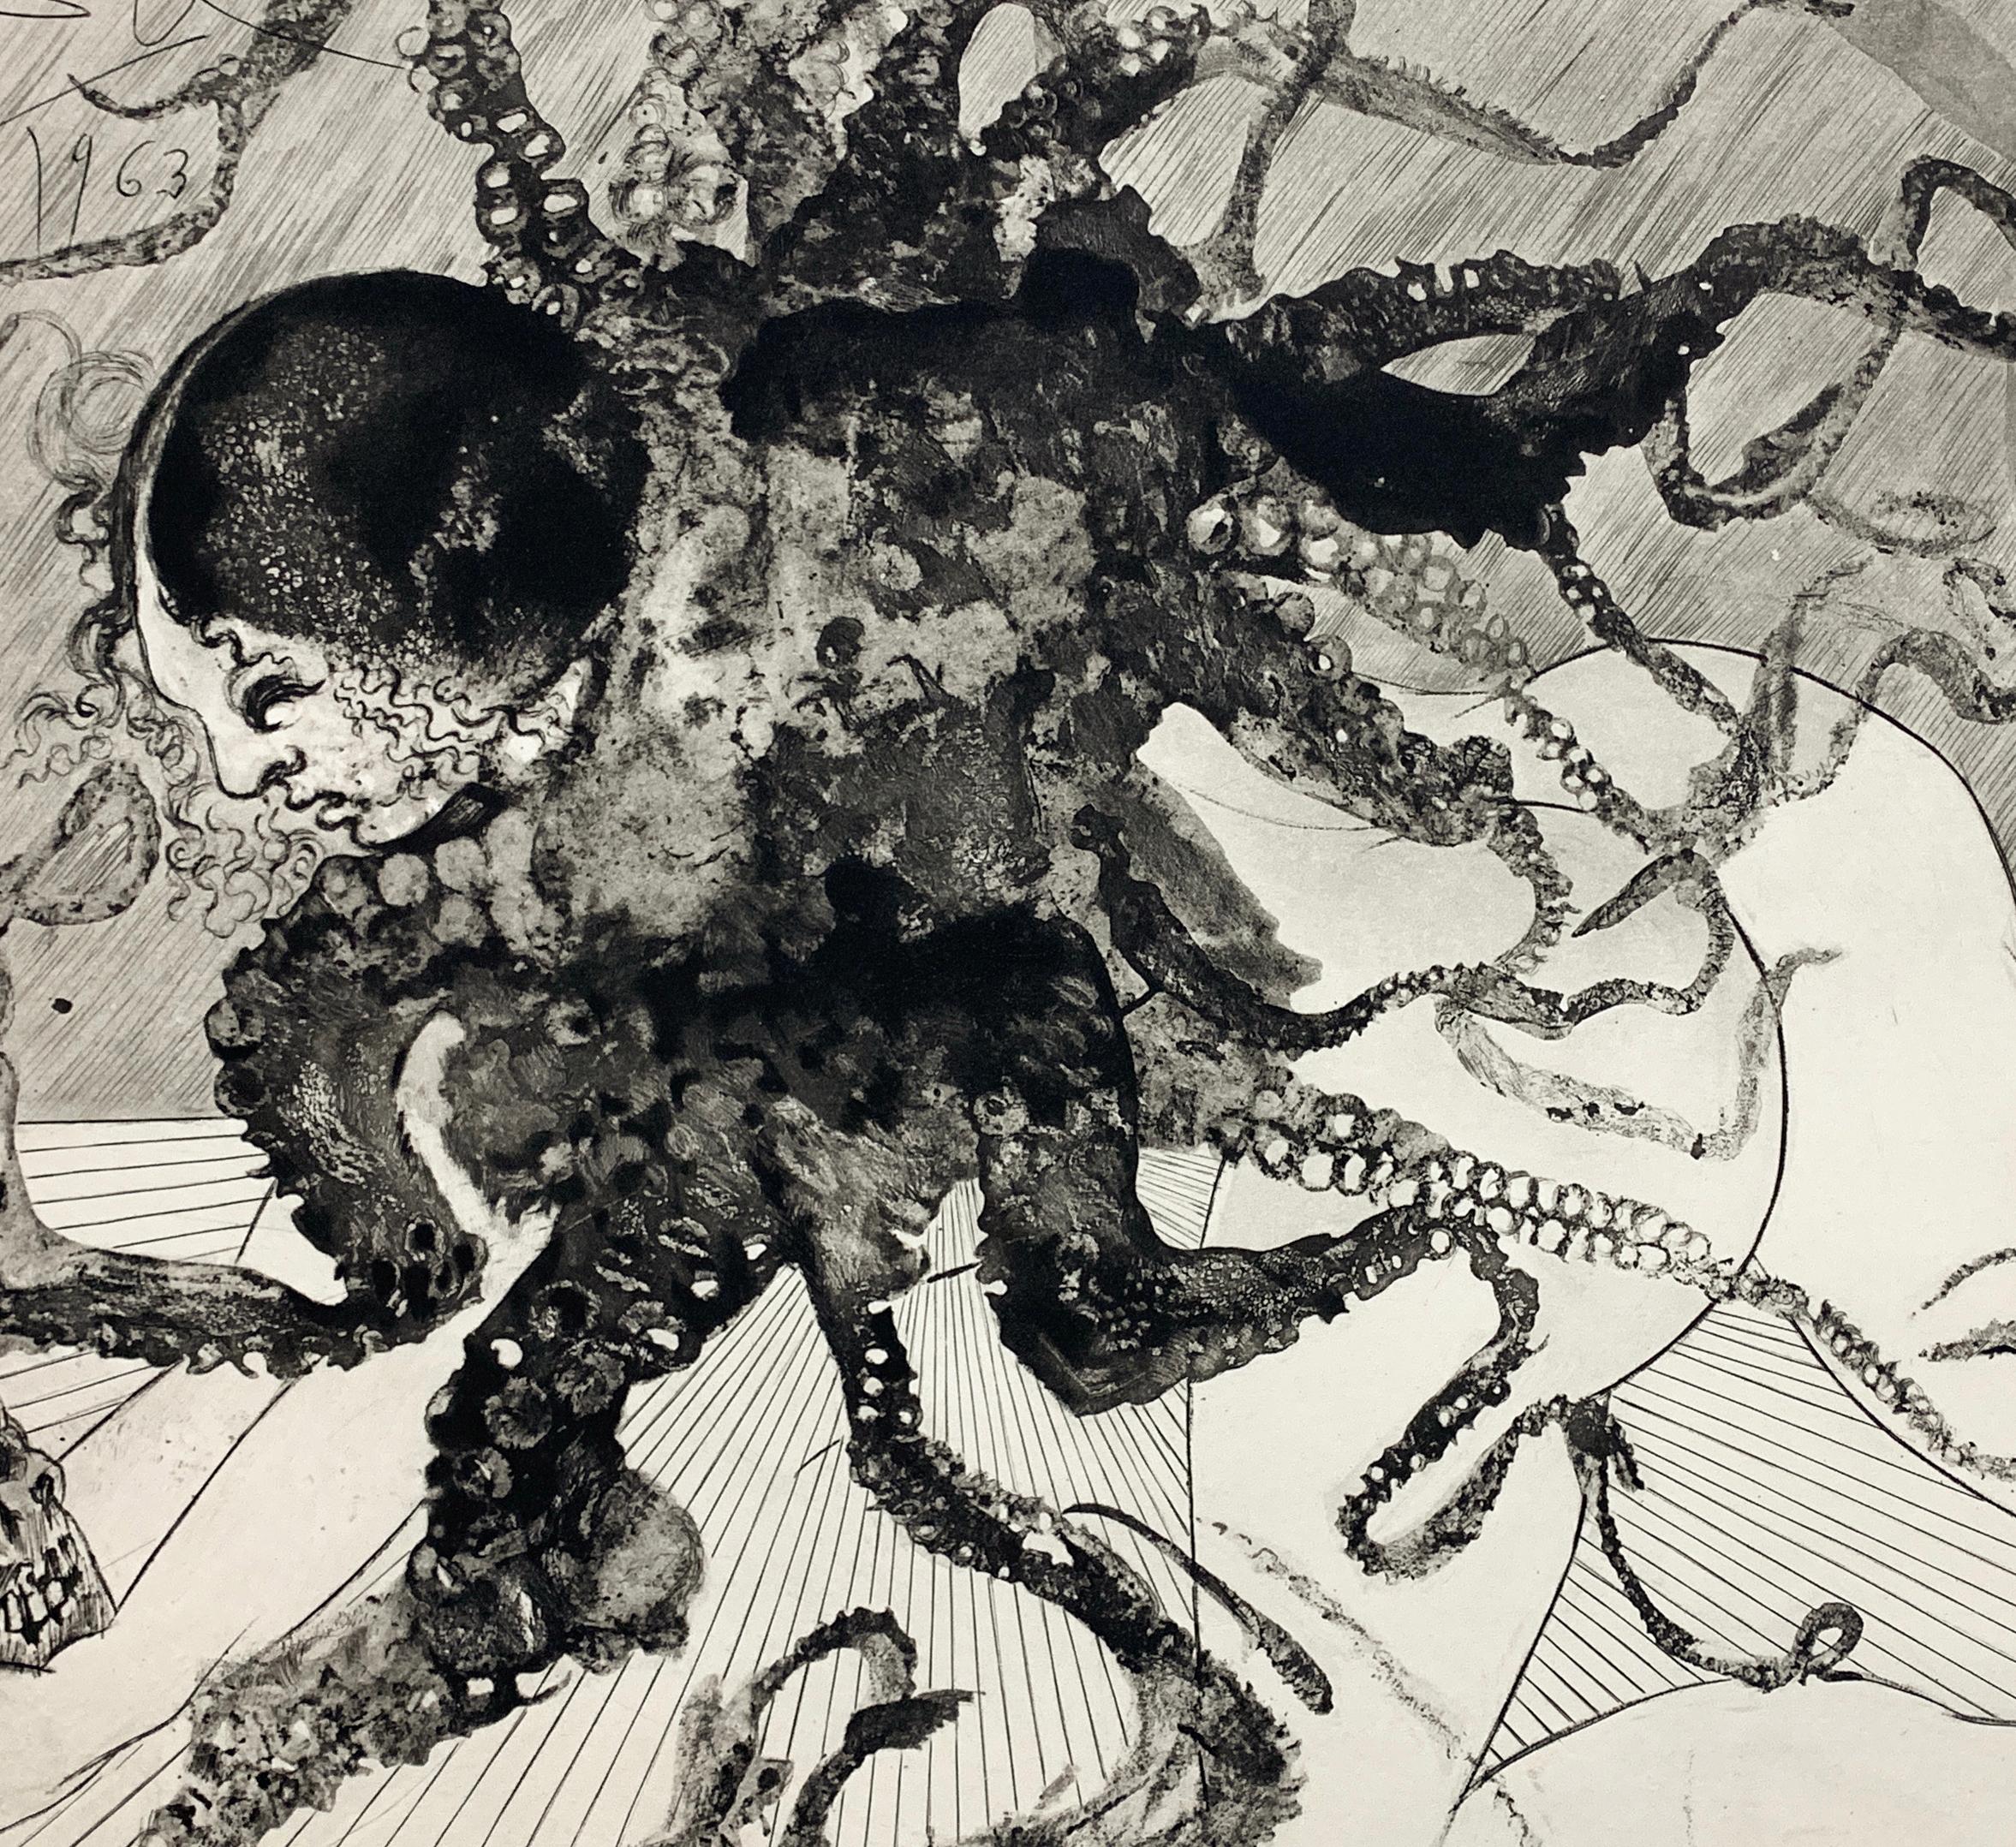 Medusa (La Meduse) - Surrealist Print by Salvador Dalí